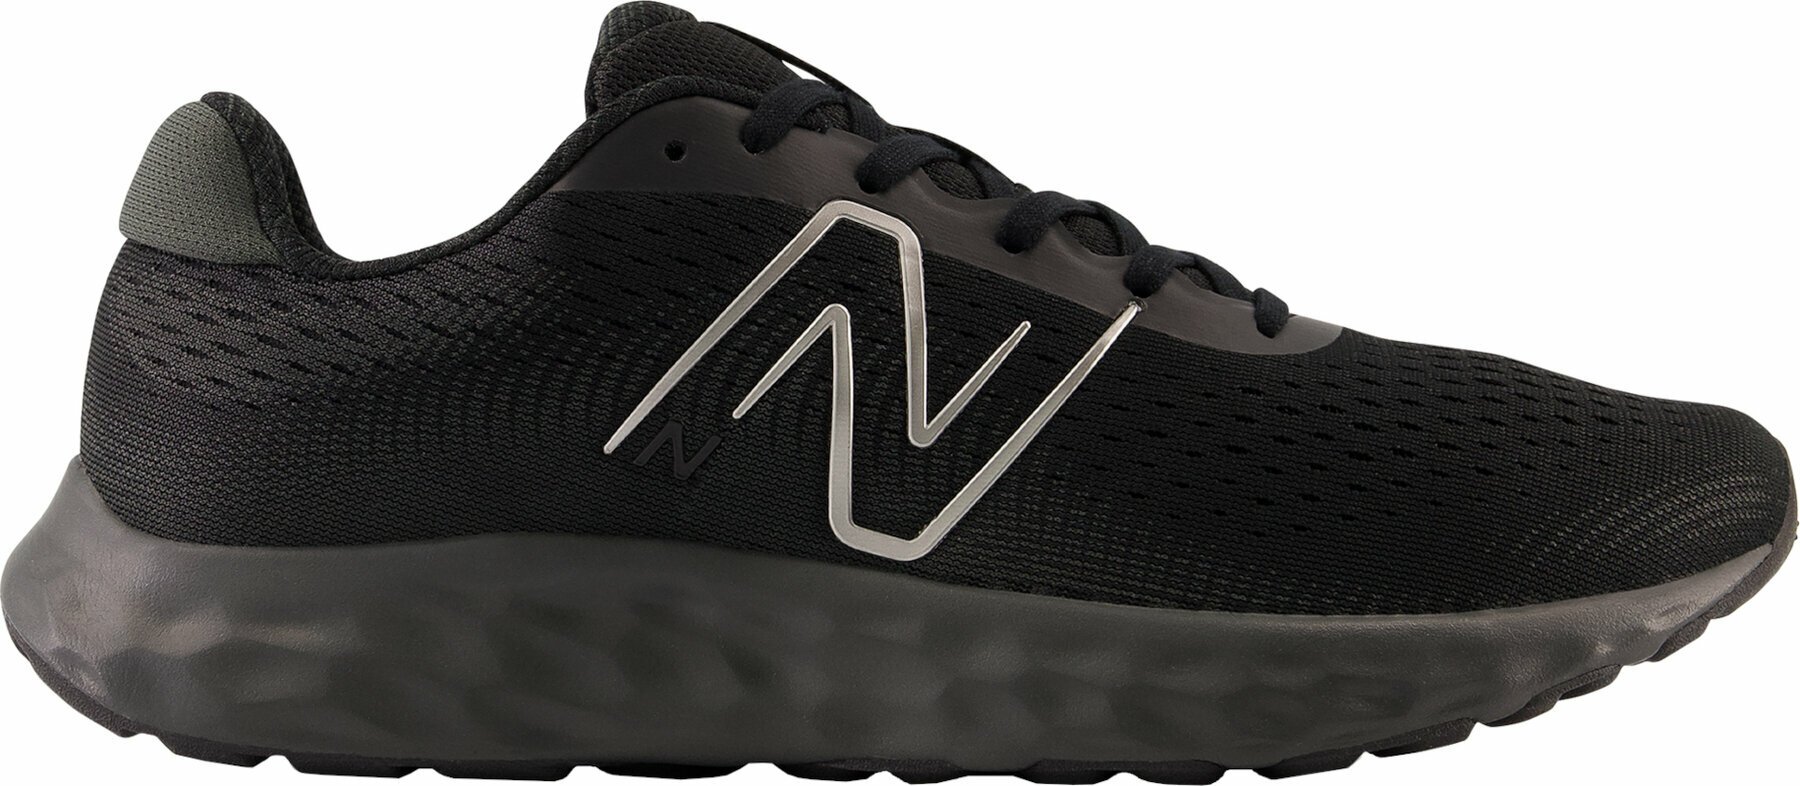 Zapatillas para correr New Balance Mens M520 Black 42 Zapatillas para correr